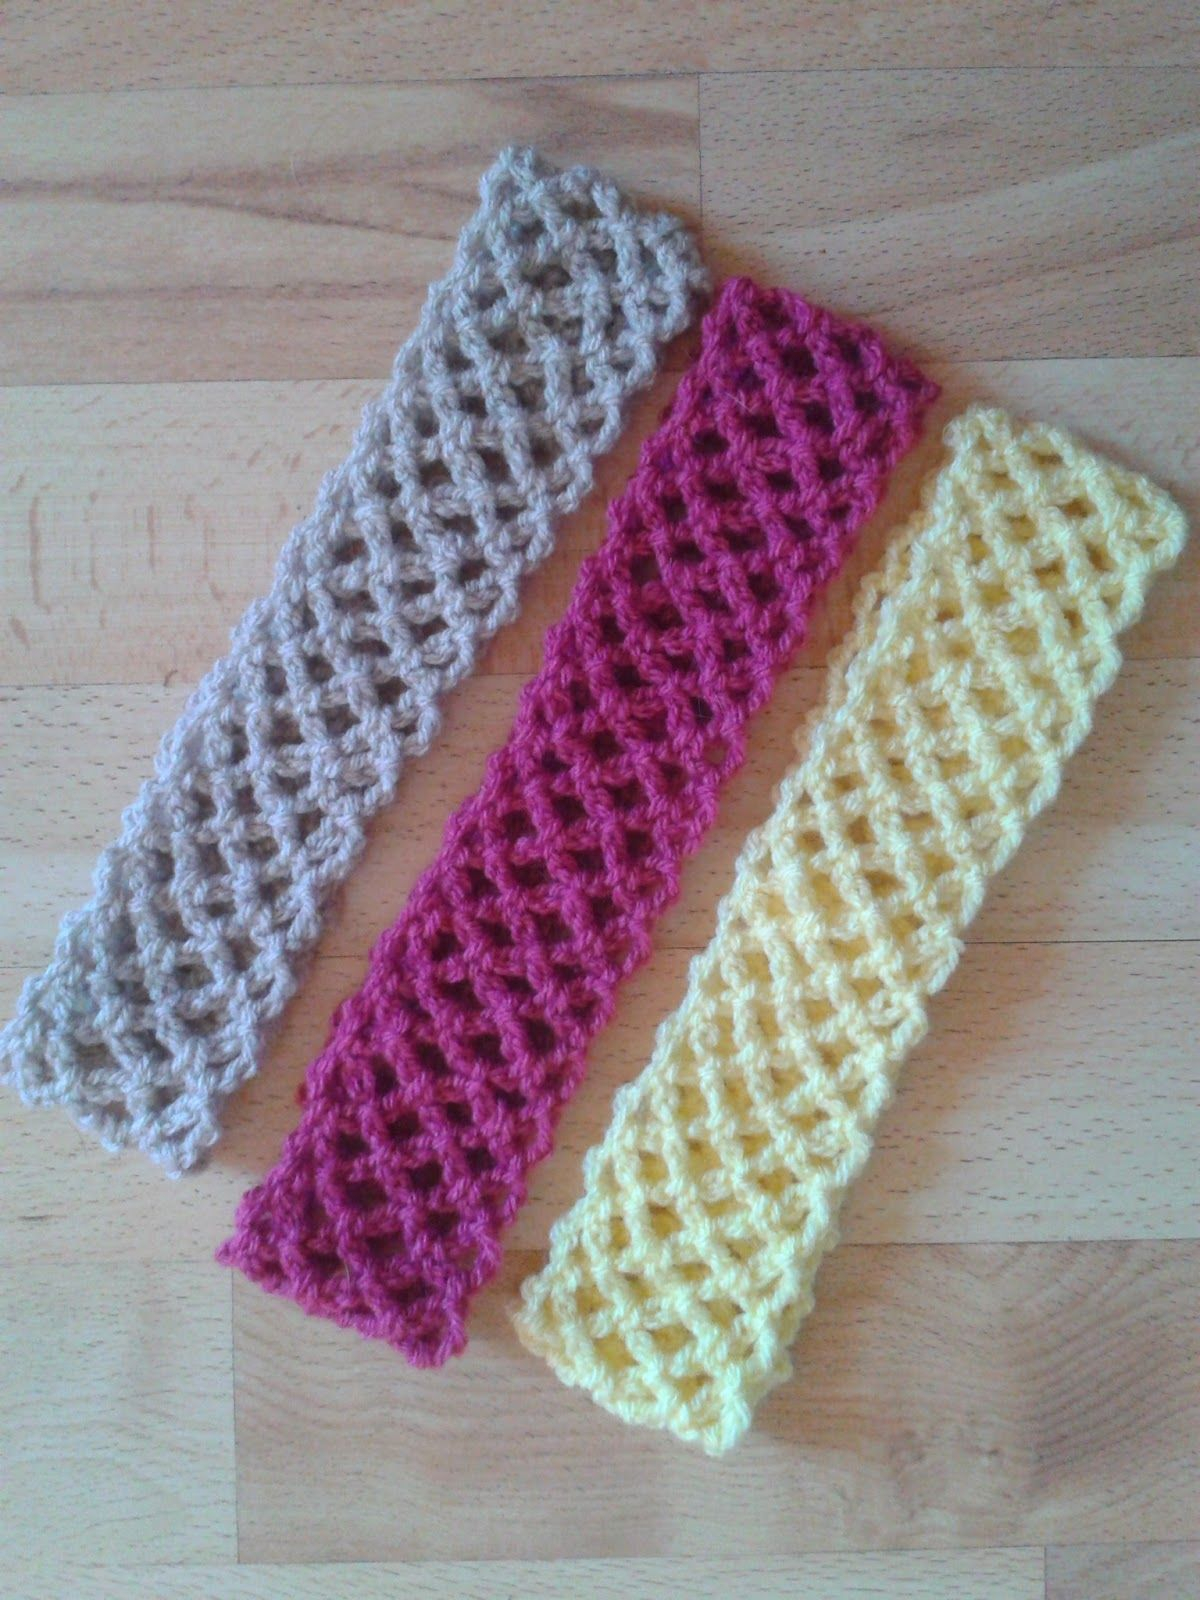 4Mm Crochet Hook Patterns Bits Bobbles Easy Crochet Lace Headband Pattern Uses Dk Yarn And